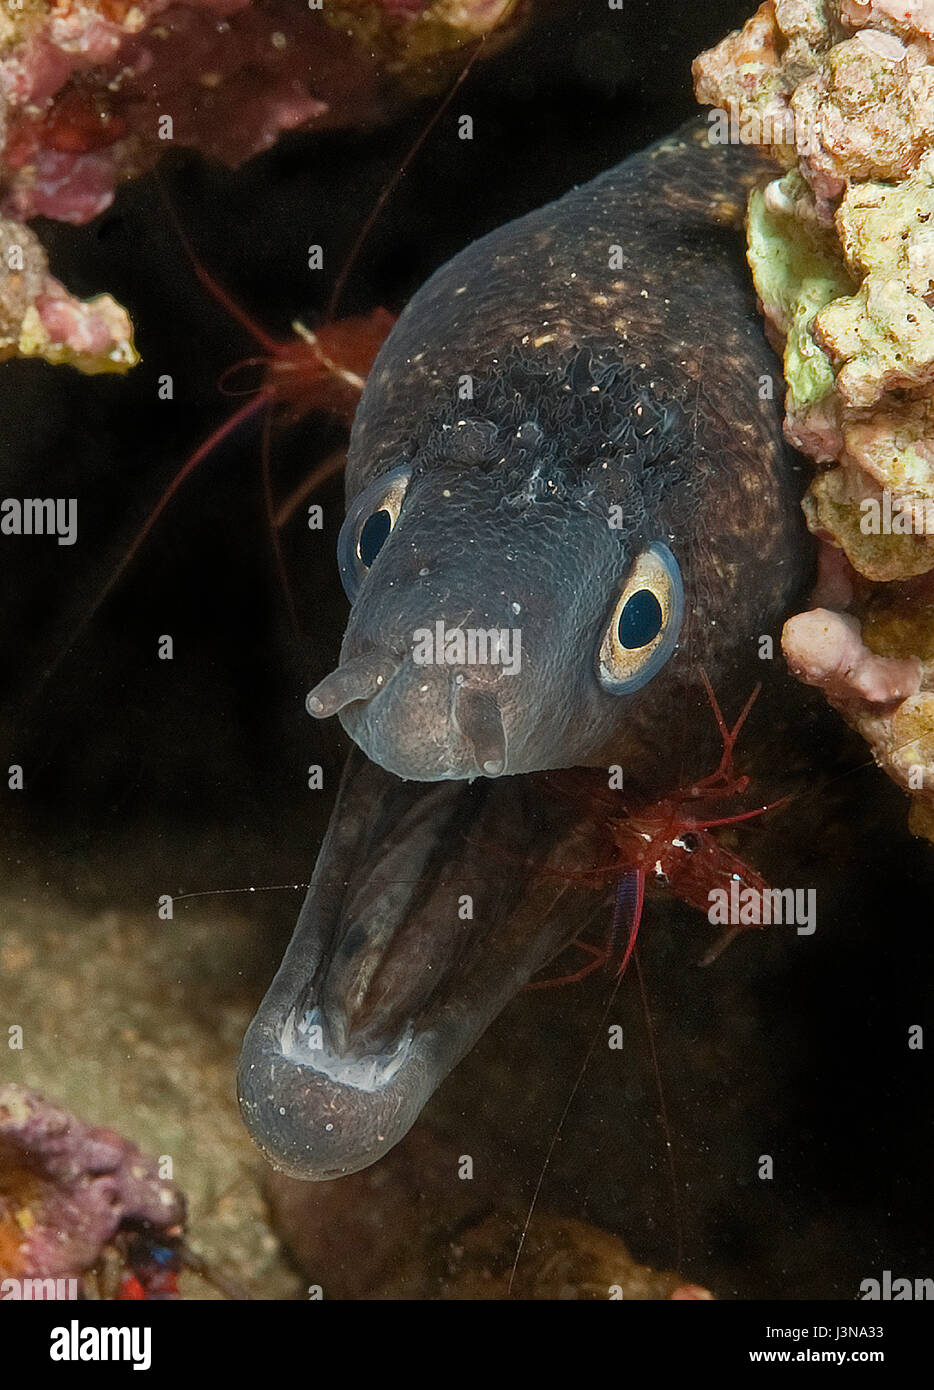 Moray eel and cleaner shrimps, Mittelmeer-Putzergarnele, Elba Tuscany, Italy, Europe, mediterranean, Murena helena,, Lysmata seticaudata, Stock Photo